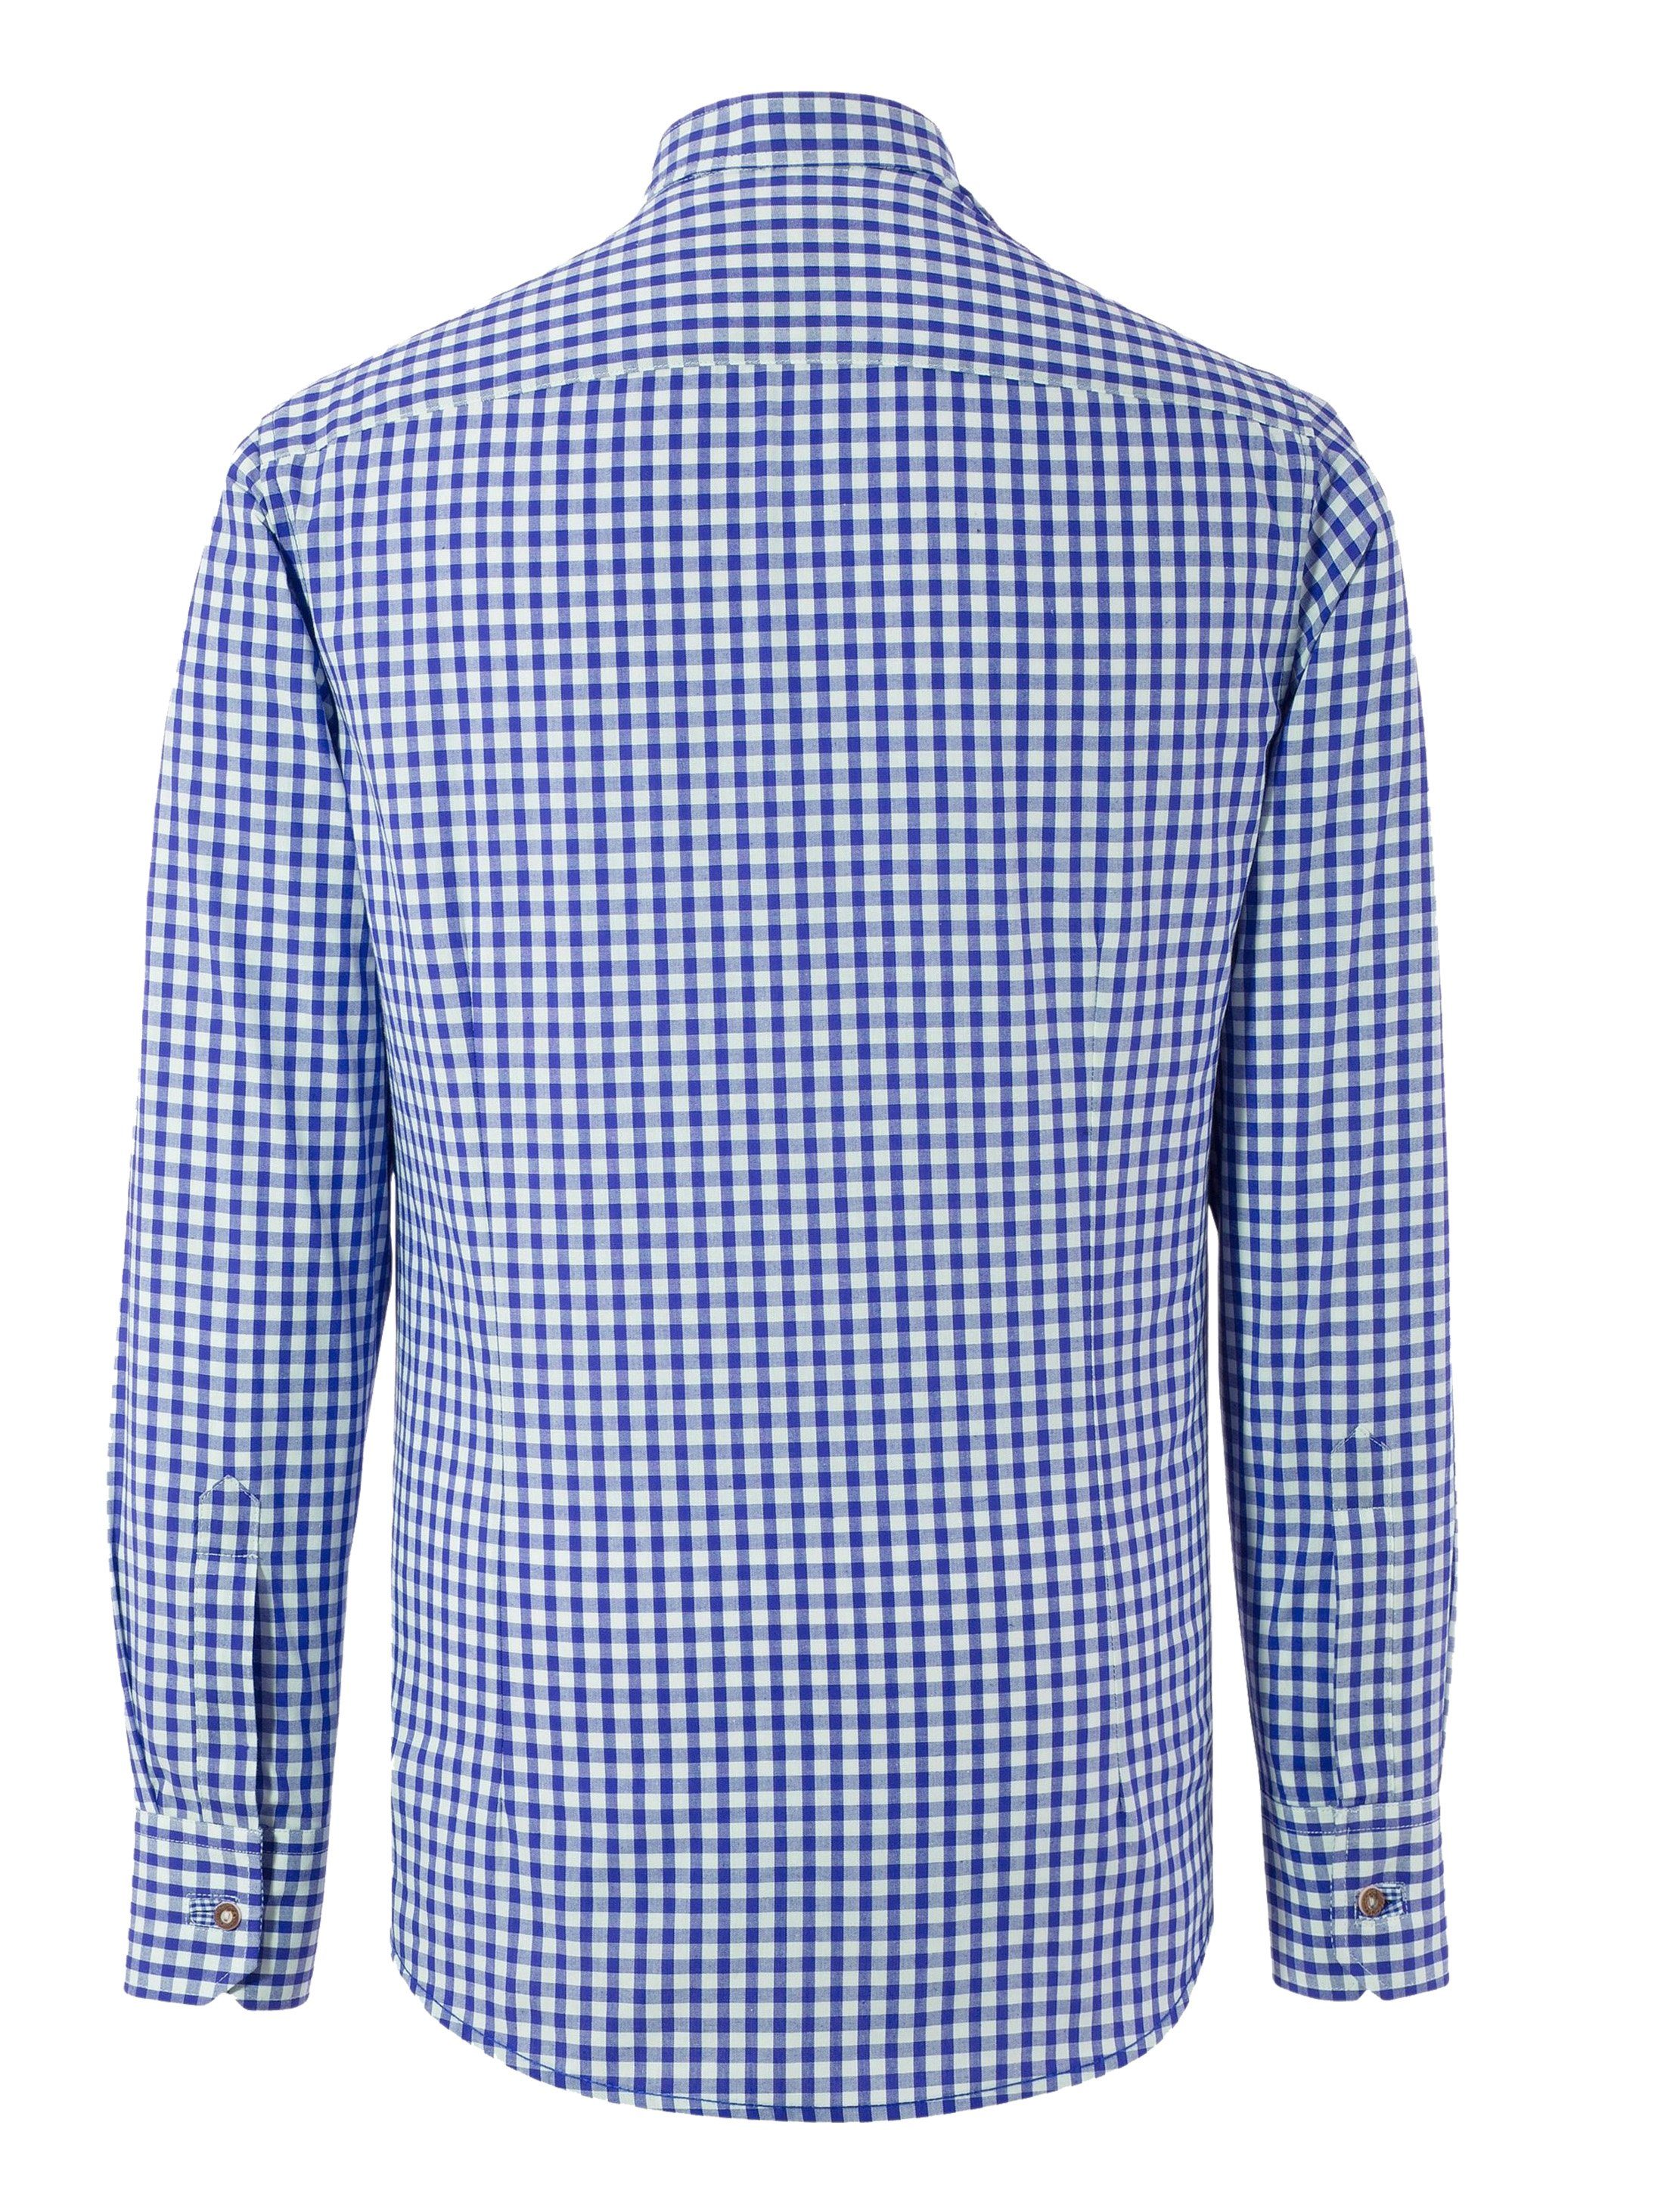 OS-Trachten Krempelarm Stehkragen Trachtenhemd blaukariert Trachtenhemd